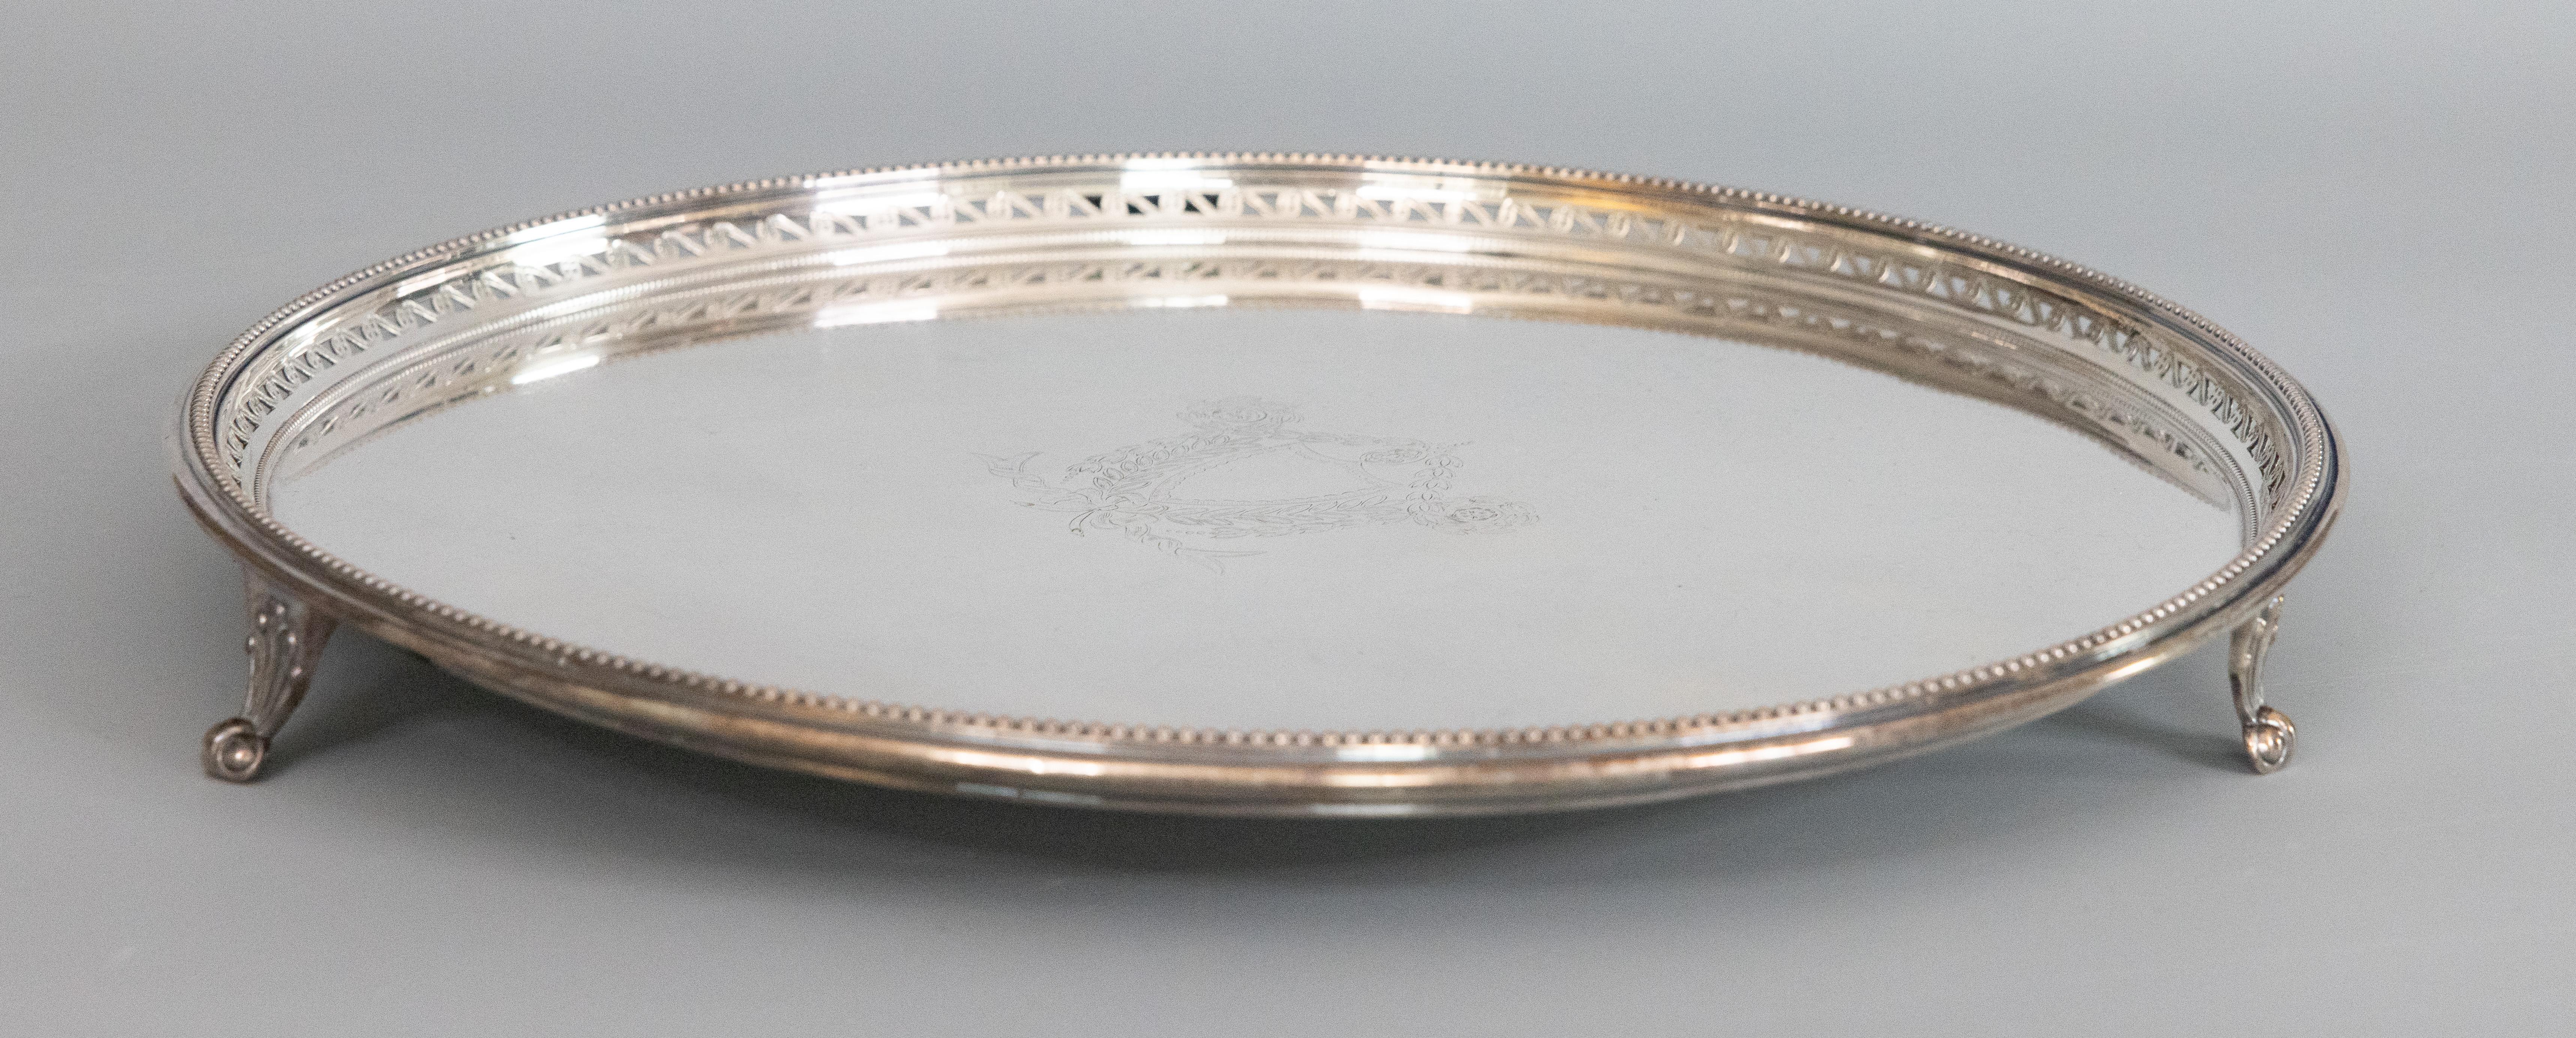 An antique English Edwardian silverplate footed salver or circular barware tray, circa 1900. Marked 